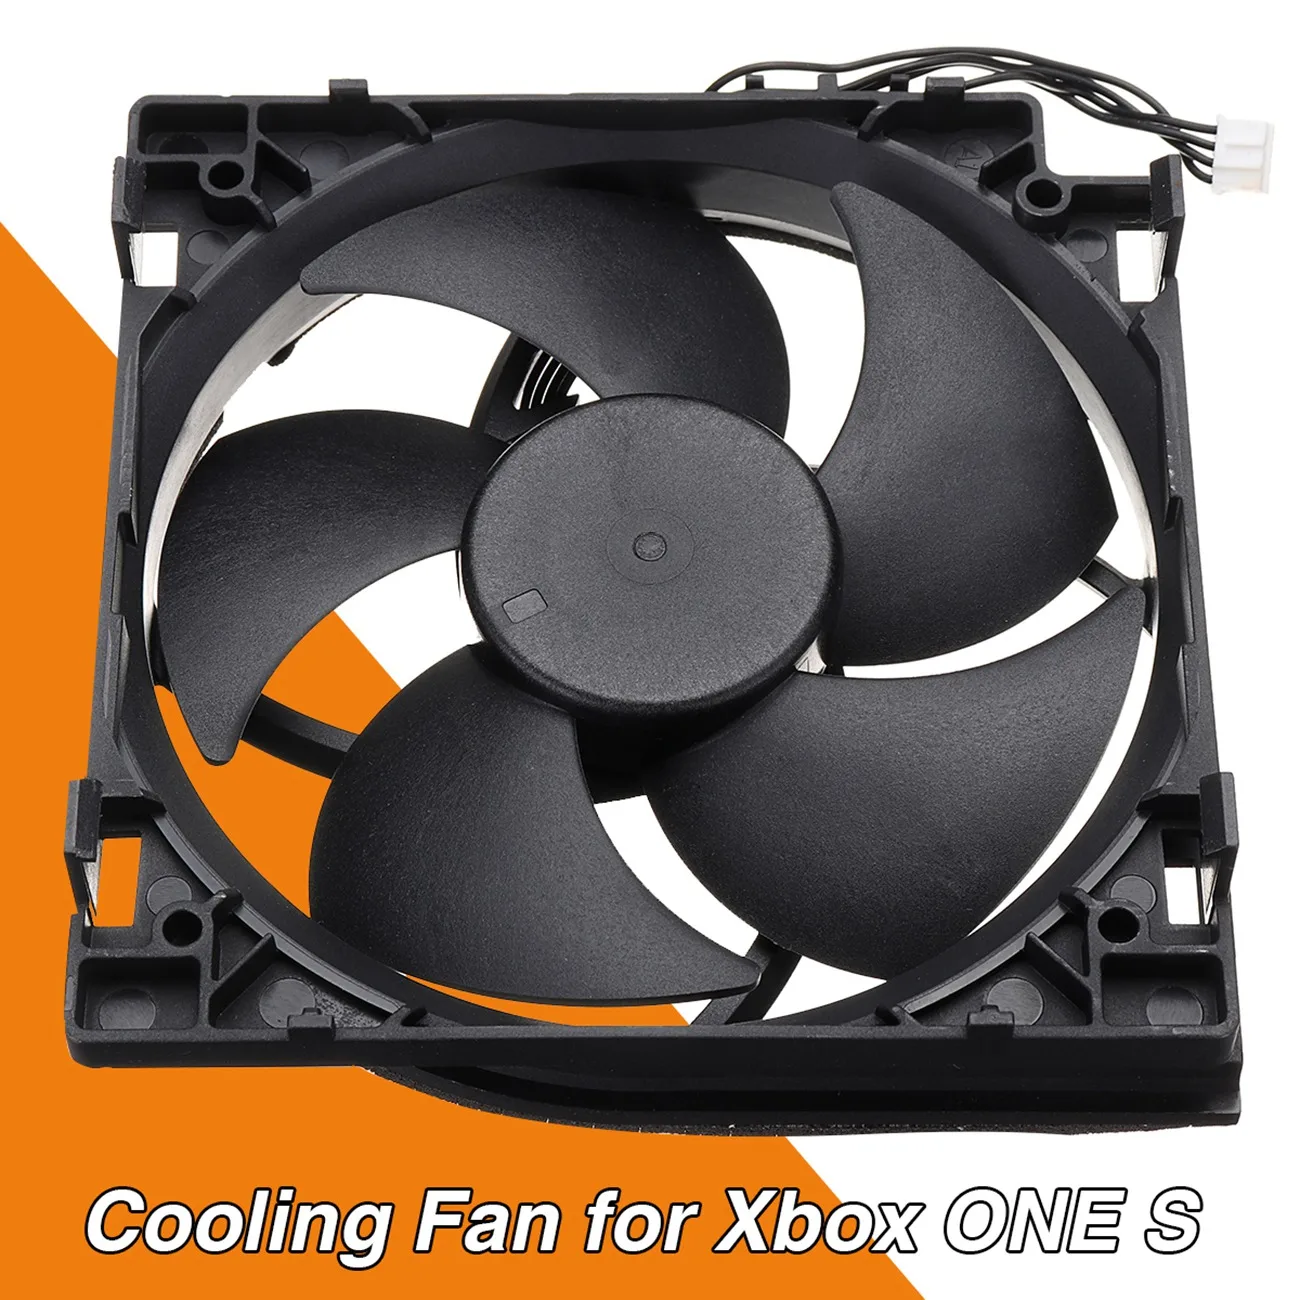 FFYY-CPU охладитель вентиляторы Замена охлаждающий вентилятор 5 лезвий 4-контактный разъем вентилятор охлаждения для Xbox ONE S